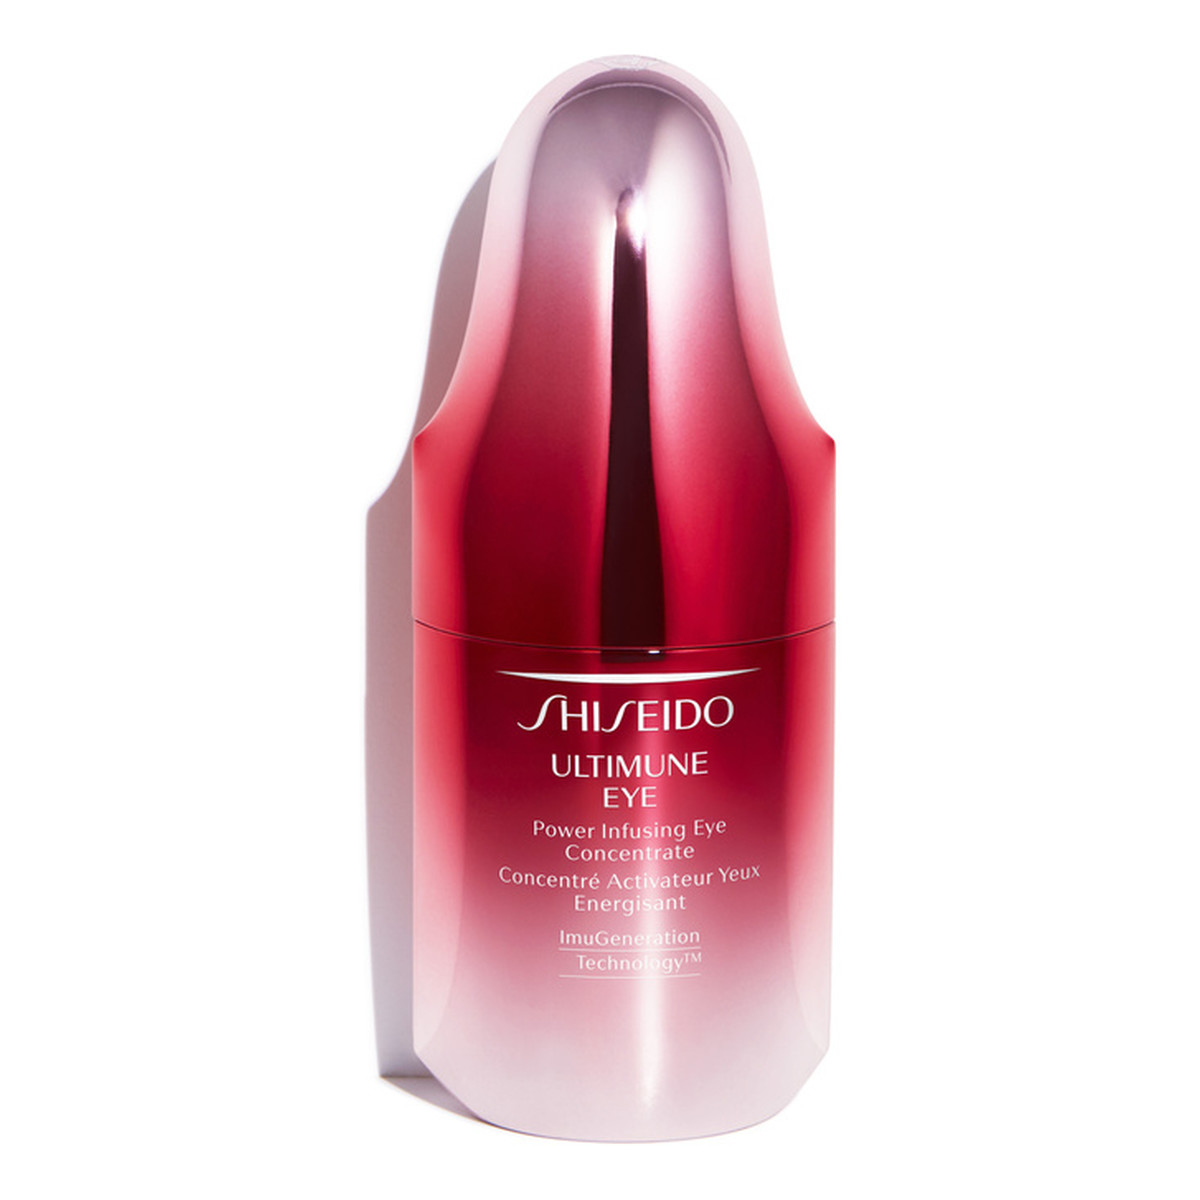 Shiseido Ultimune eye power infusing eye concentrate regenerujący koncentrat pod oczy 15ml